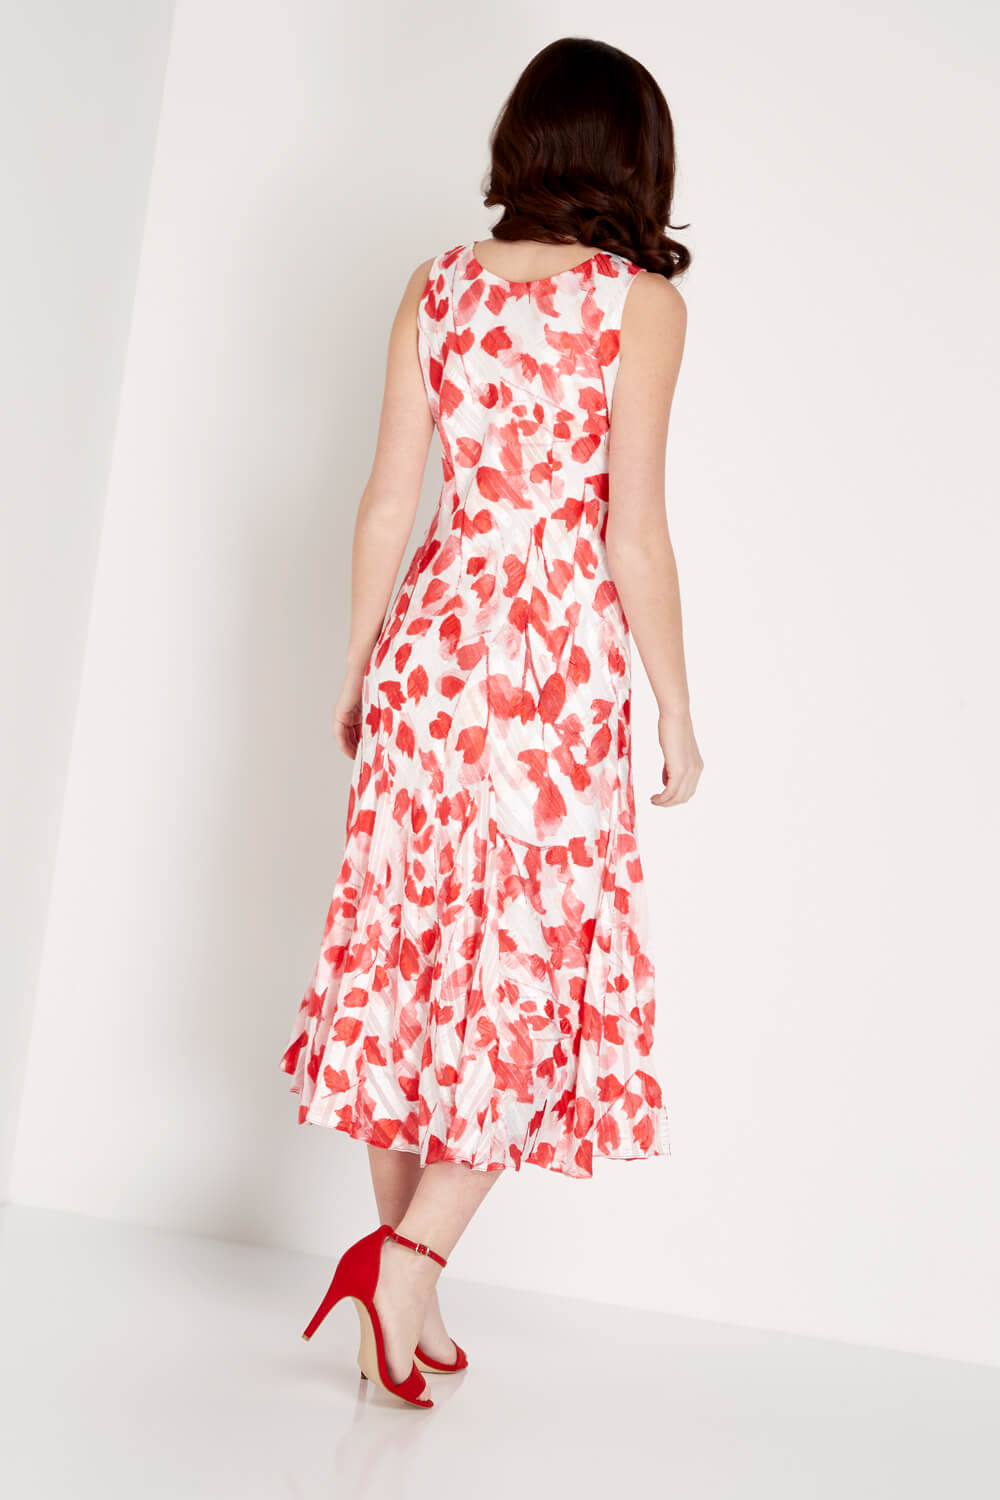 Red Poppy Print Bias Cut Dress, Image 3 of 4